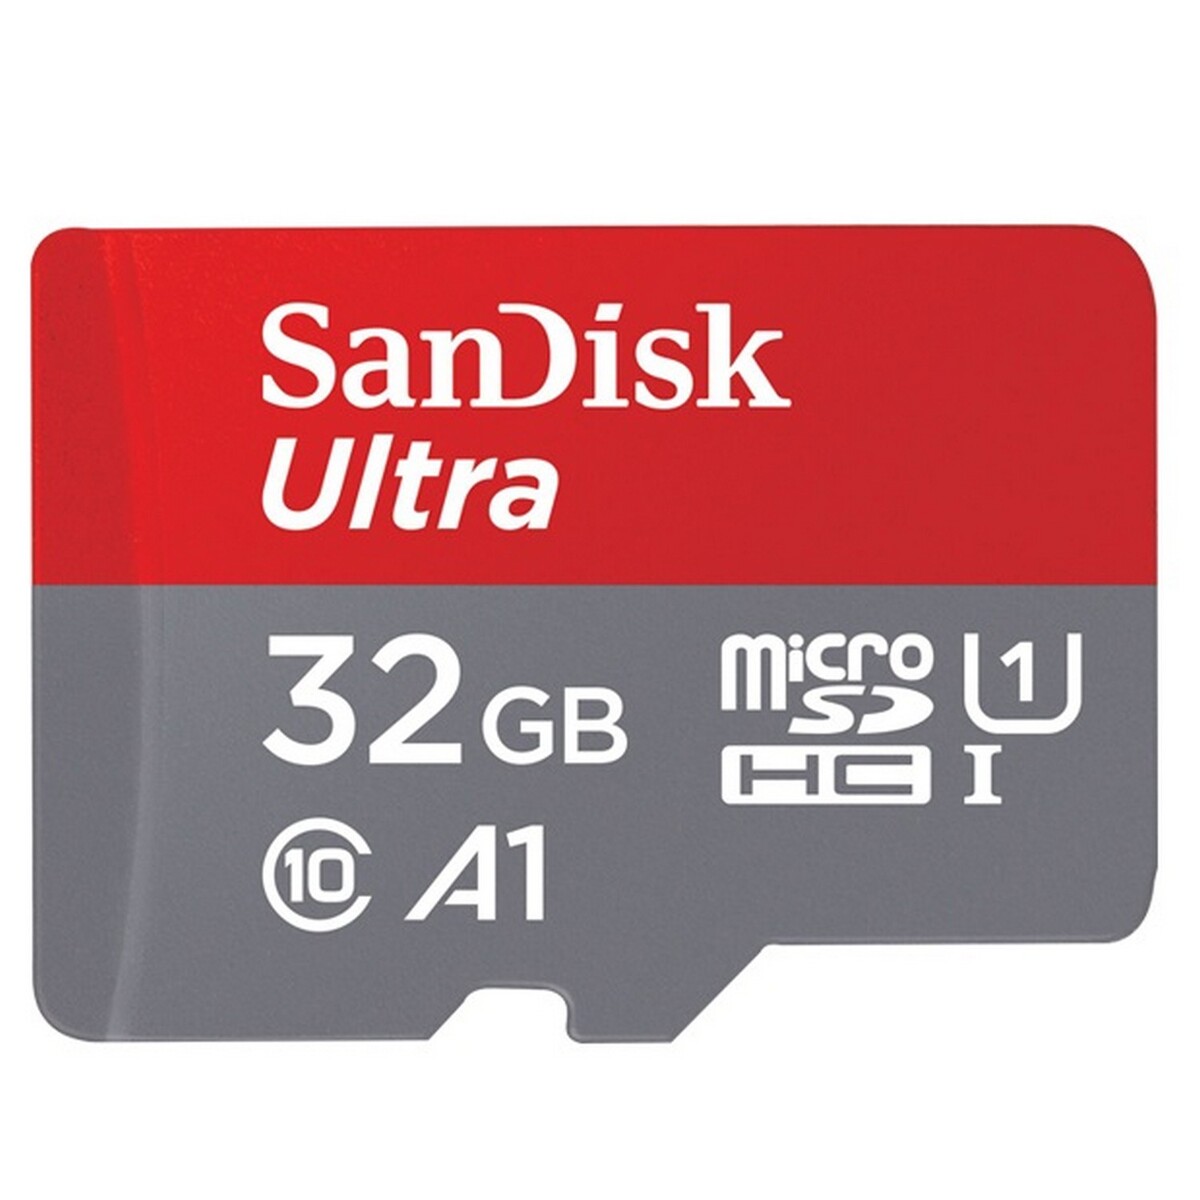 Sandisk Micro SD Card 100MBs 32GB